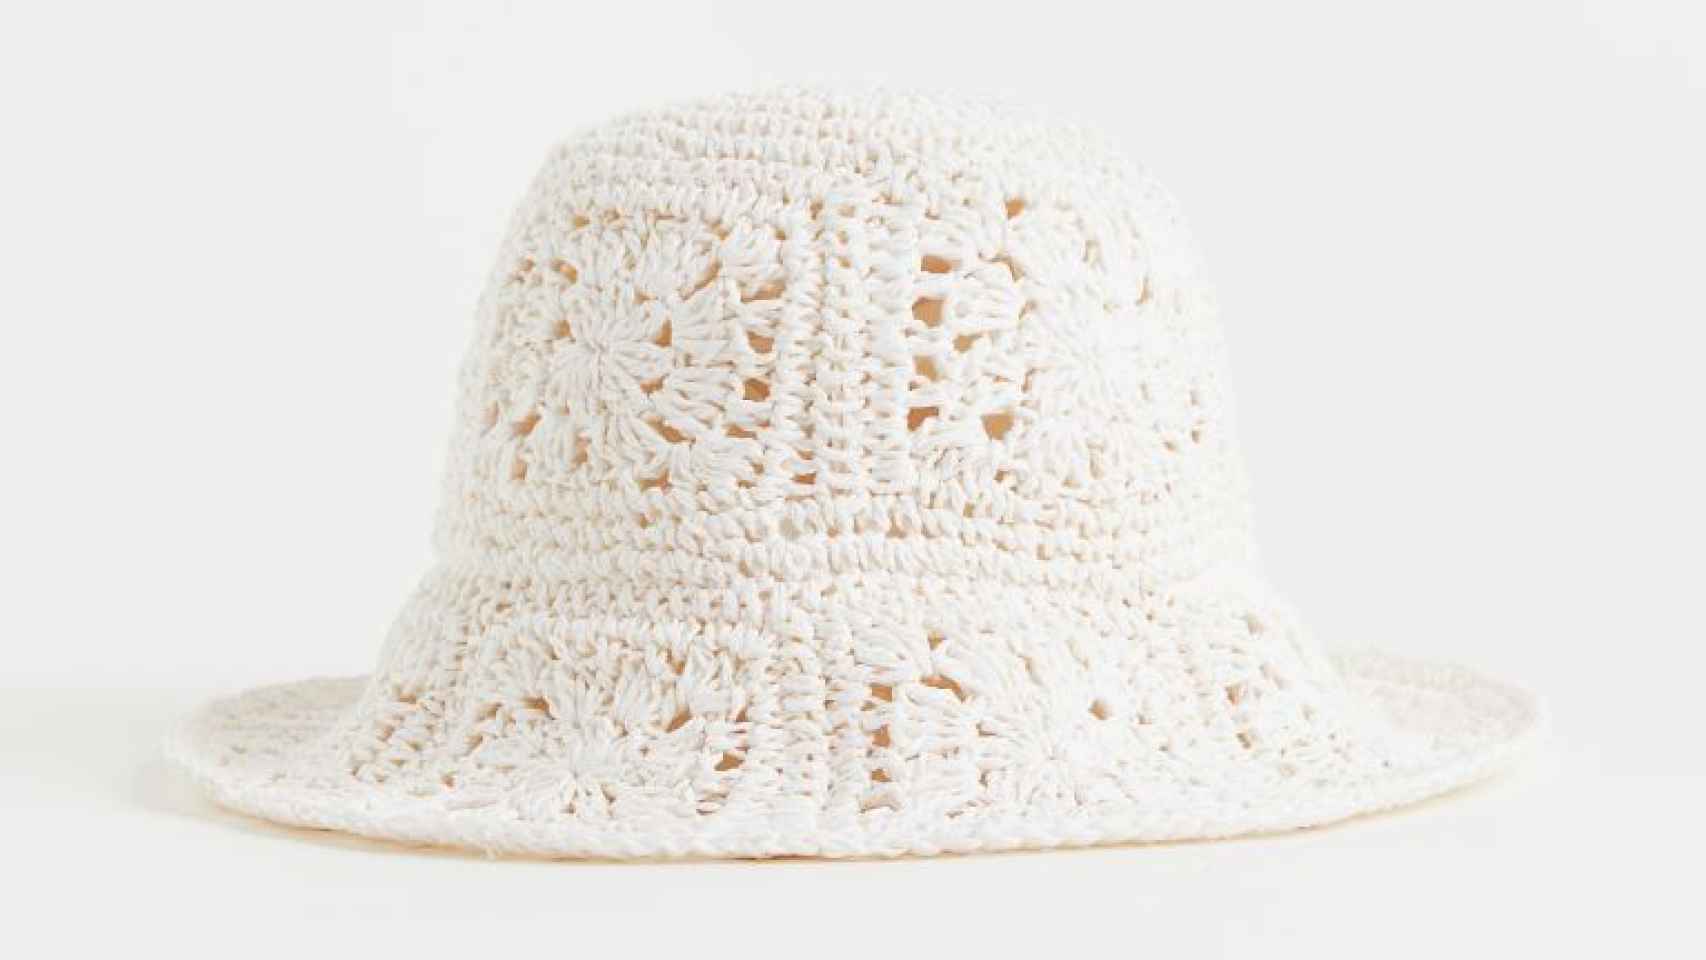 Sombrero crochet de H&M.